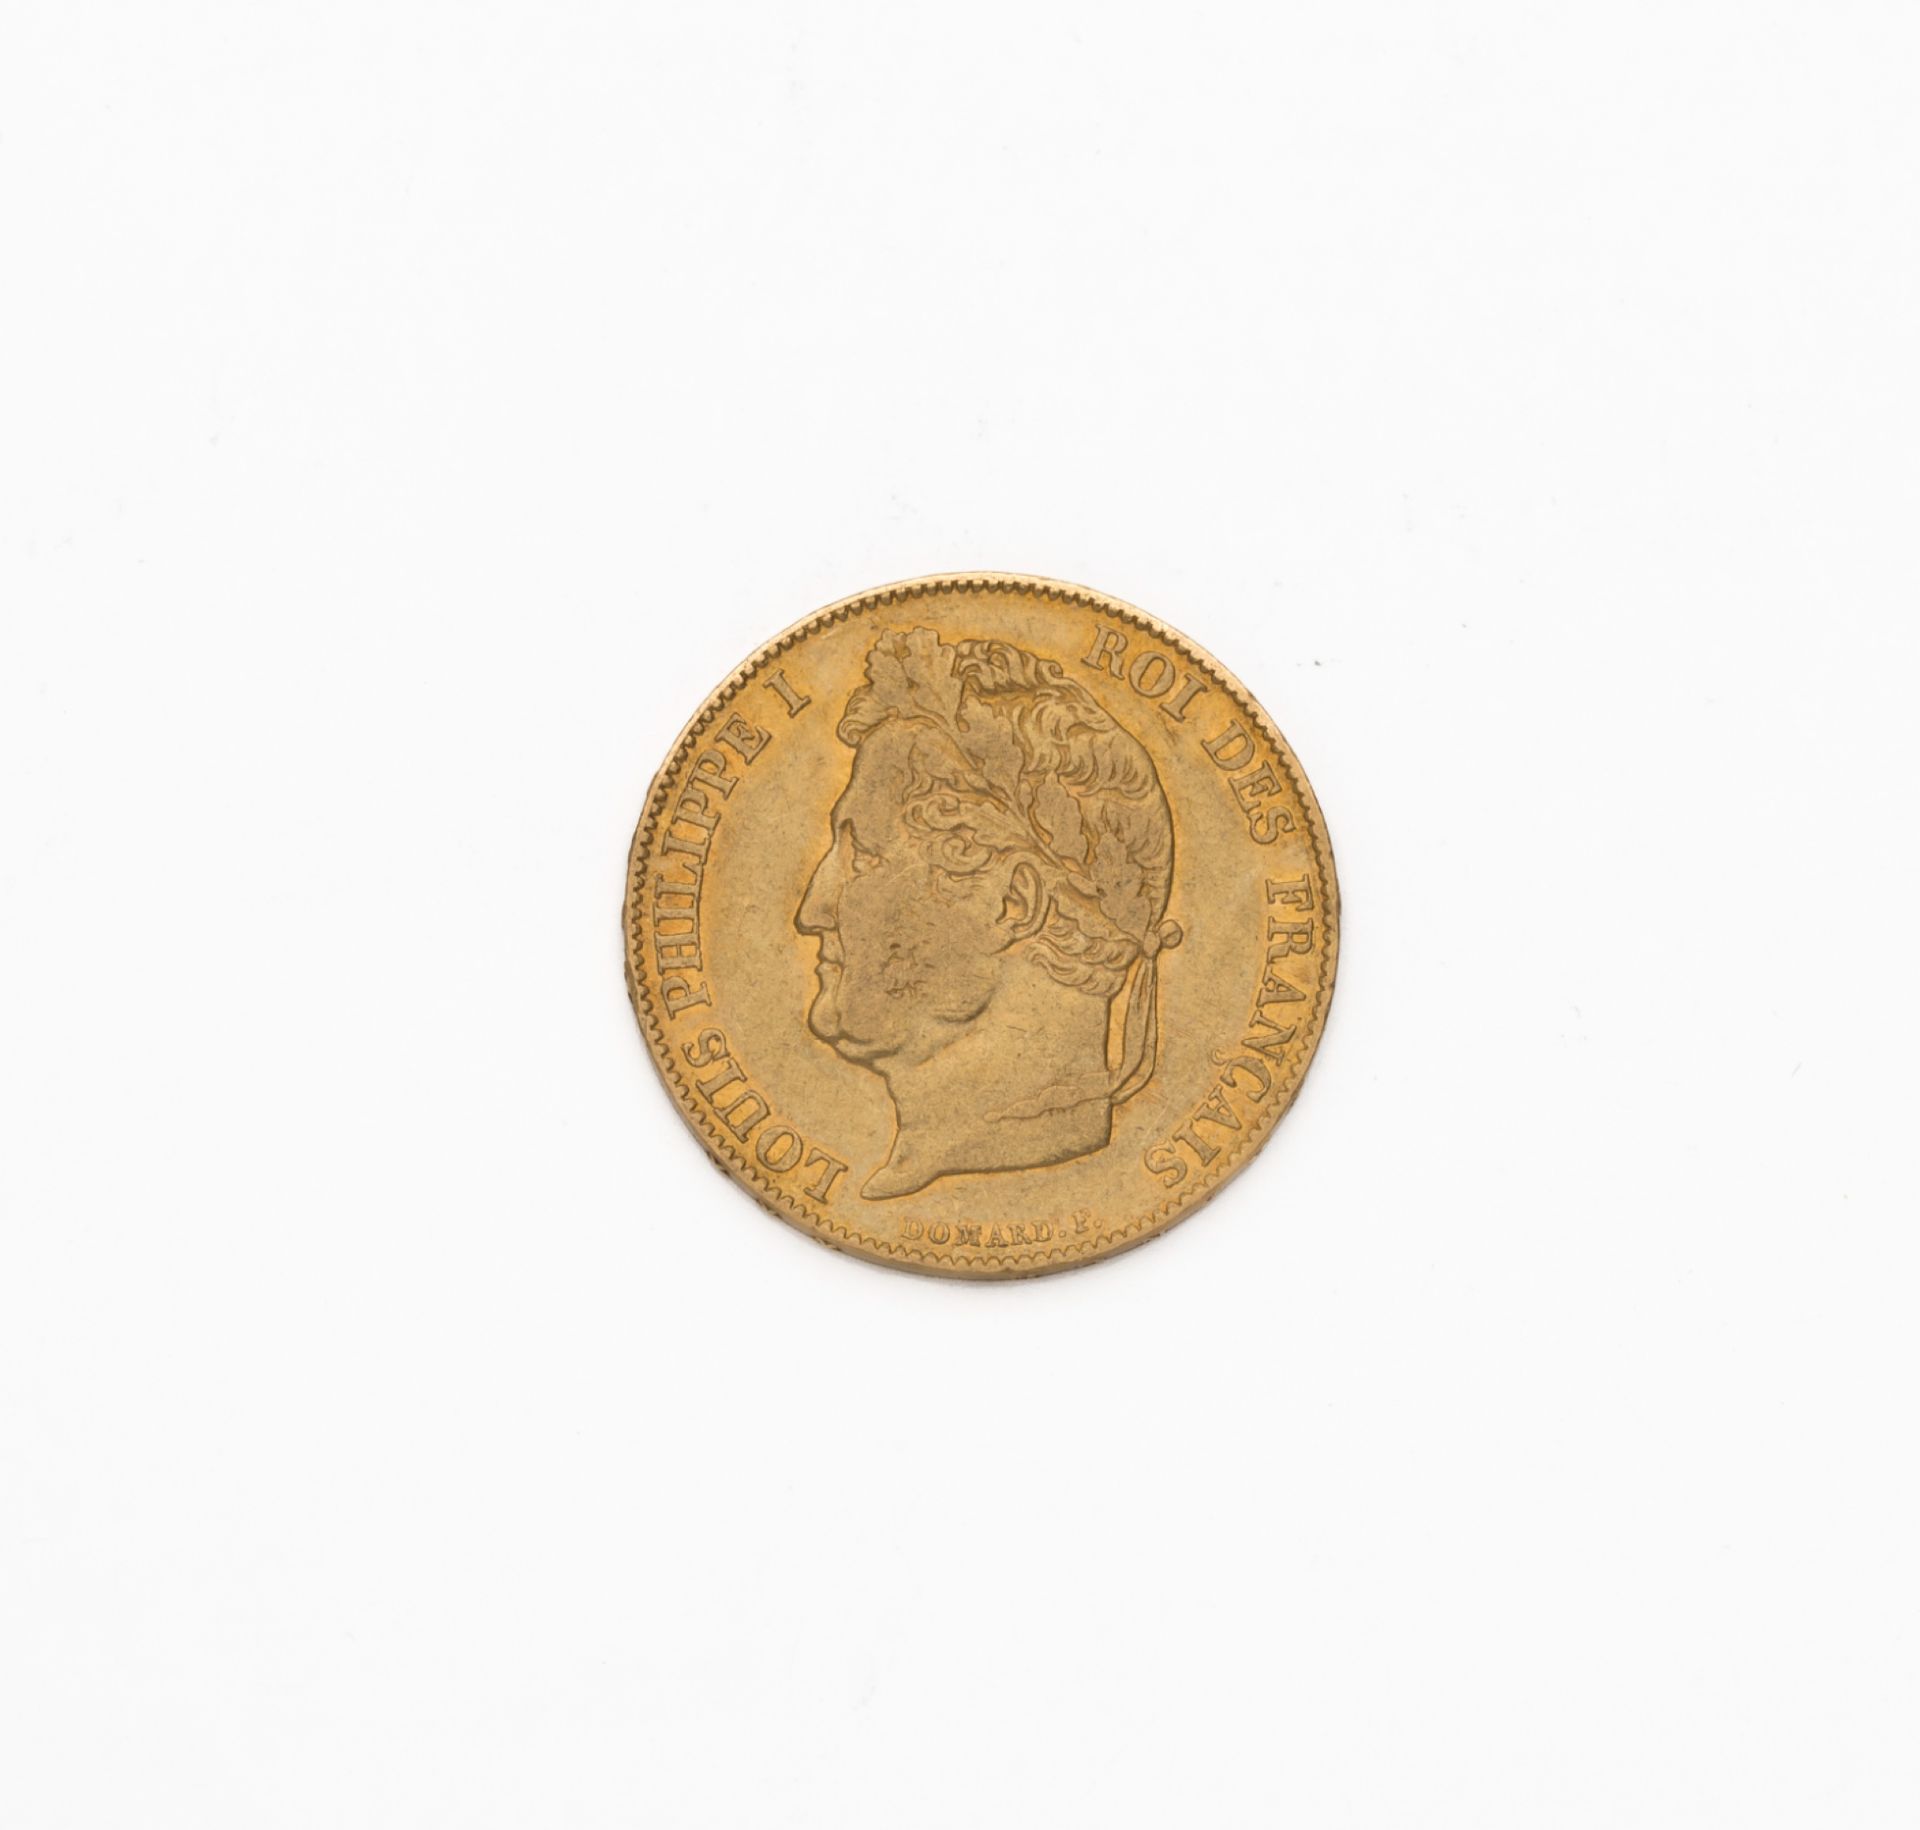 Null FRANKREICH - Louis-Philippe I.
20 Goldfranken, Kopf mit Lorbeerblatt. 1833 &hellip;